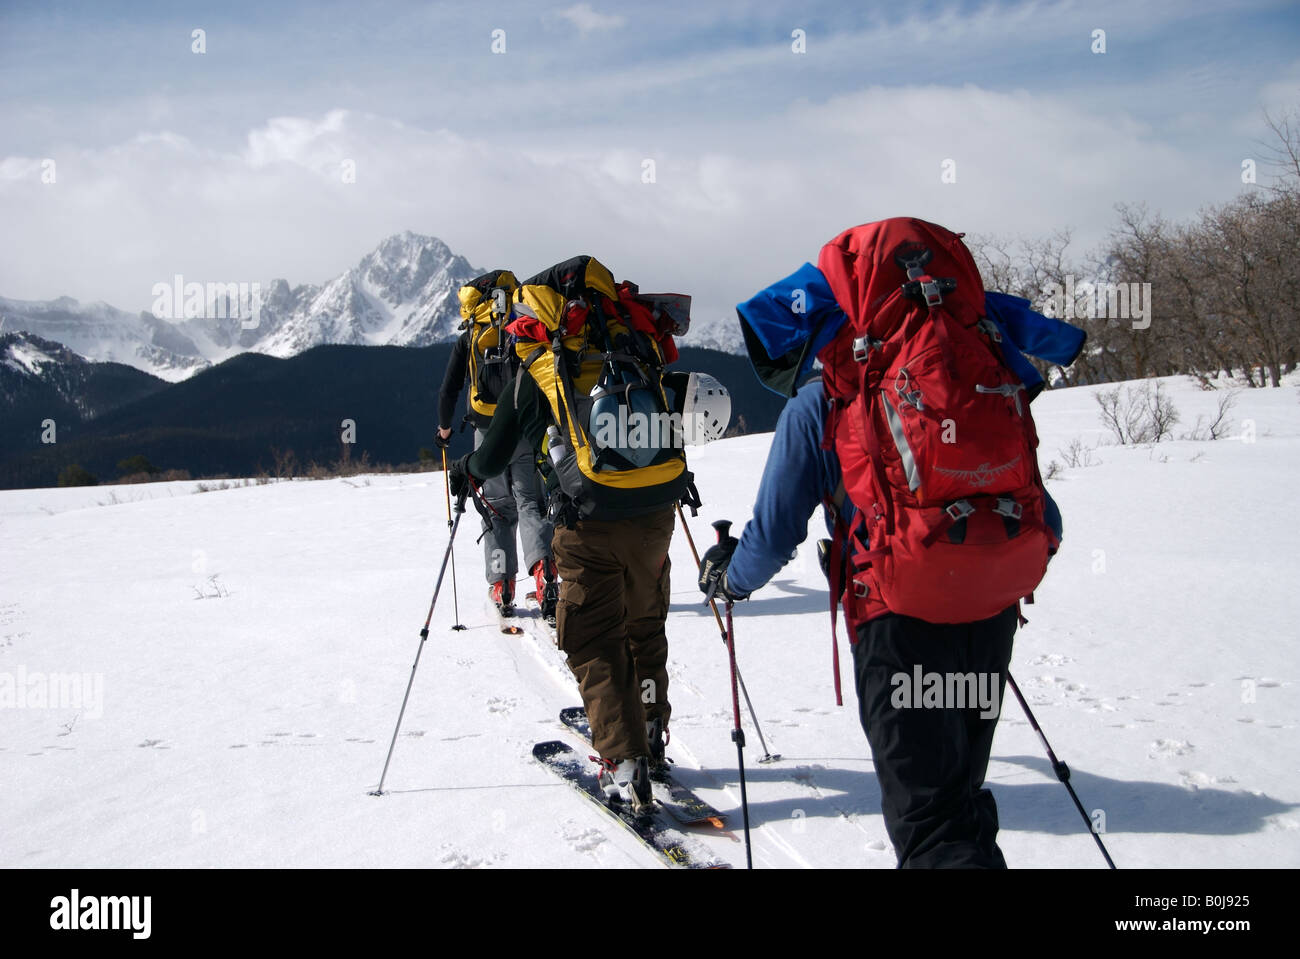 a group of backcountry skiers skin up to the mountains to ski, San Juan mountains, Colorado. Stock Photo